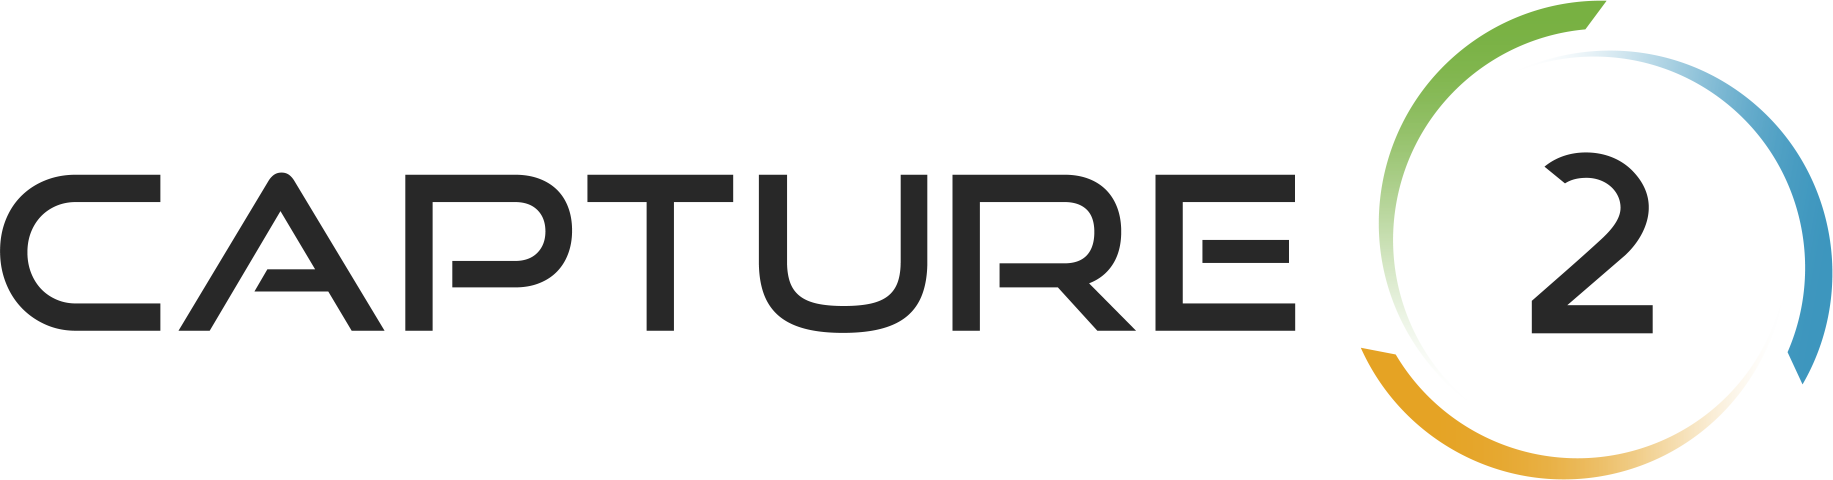 Capture2, Inc. Logo